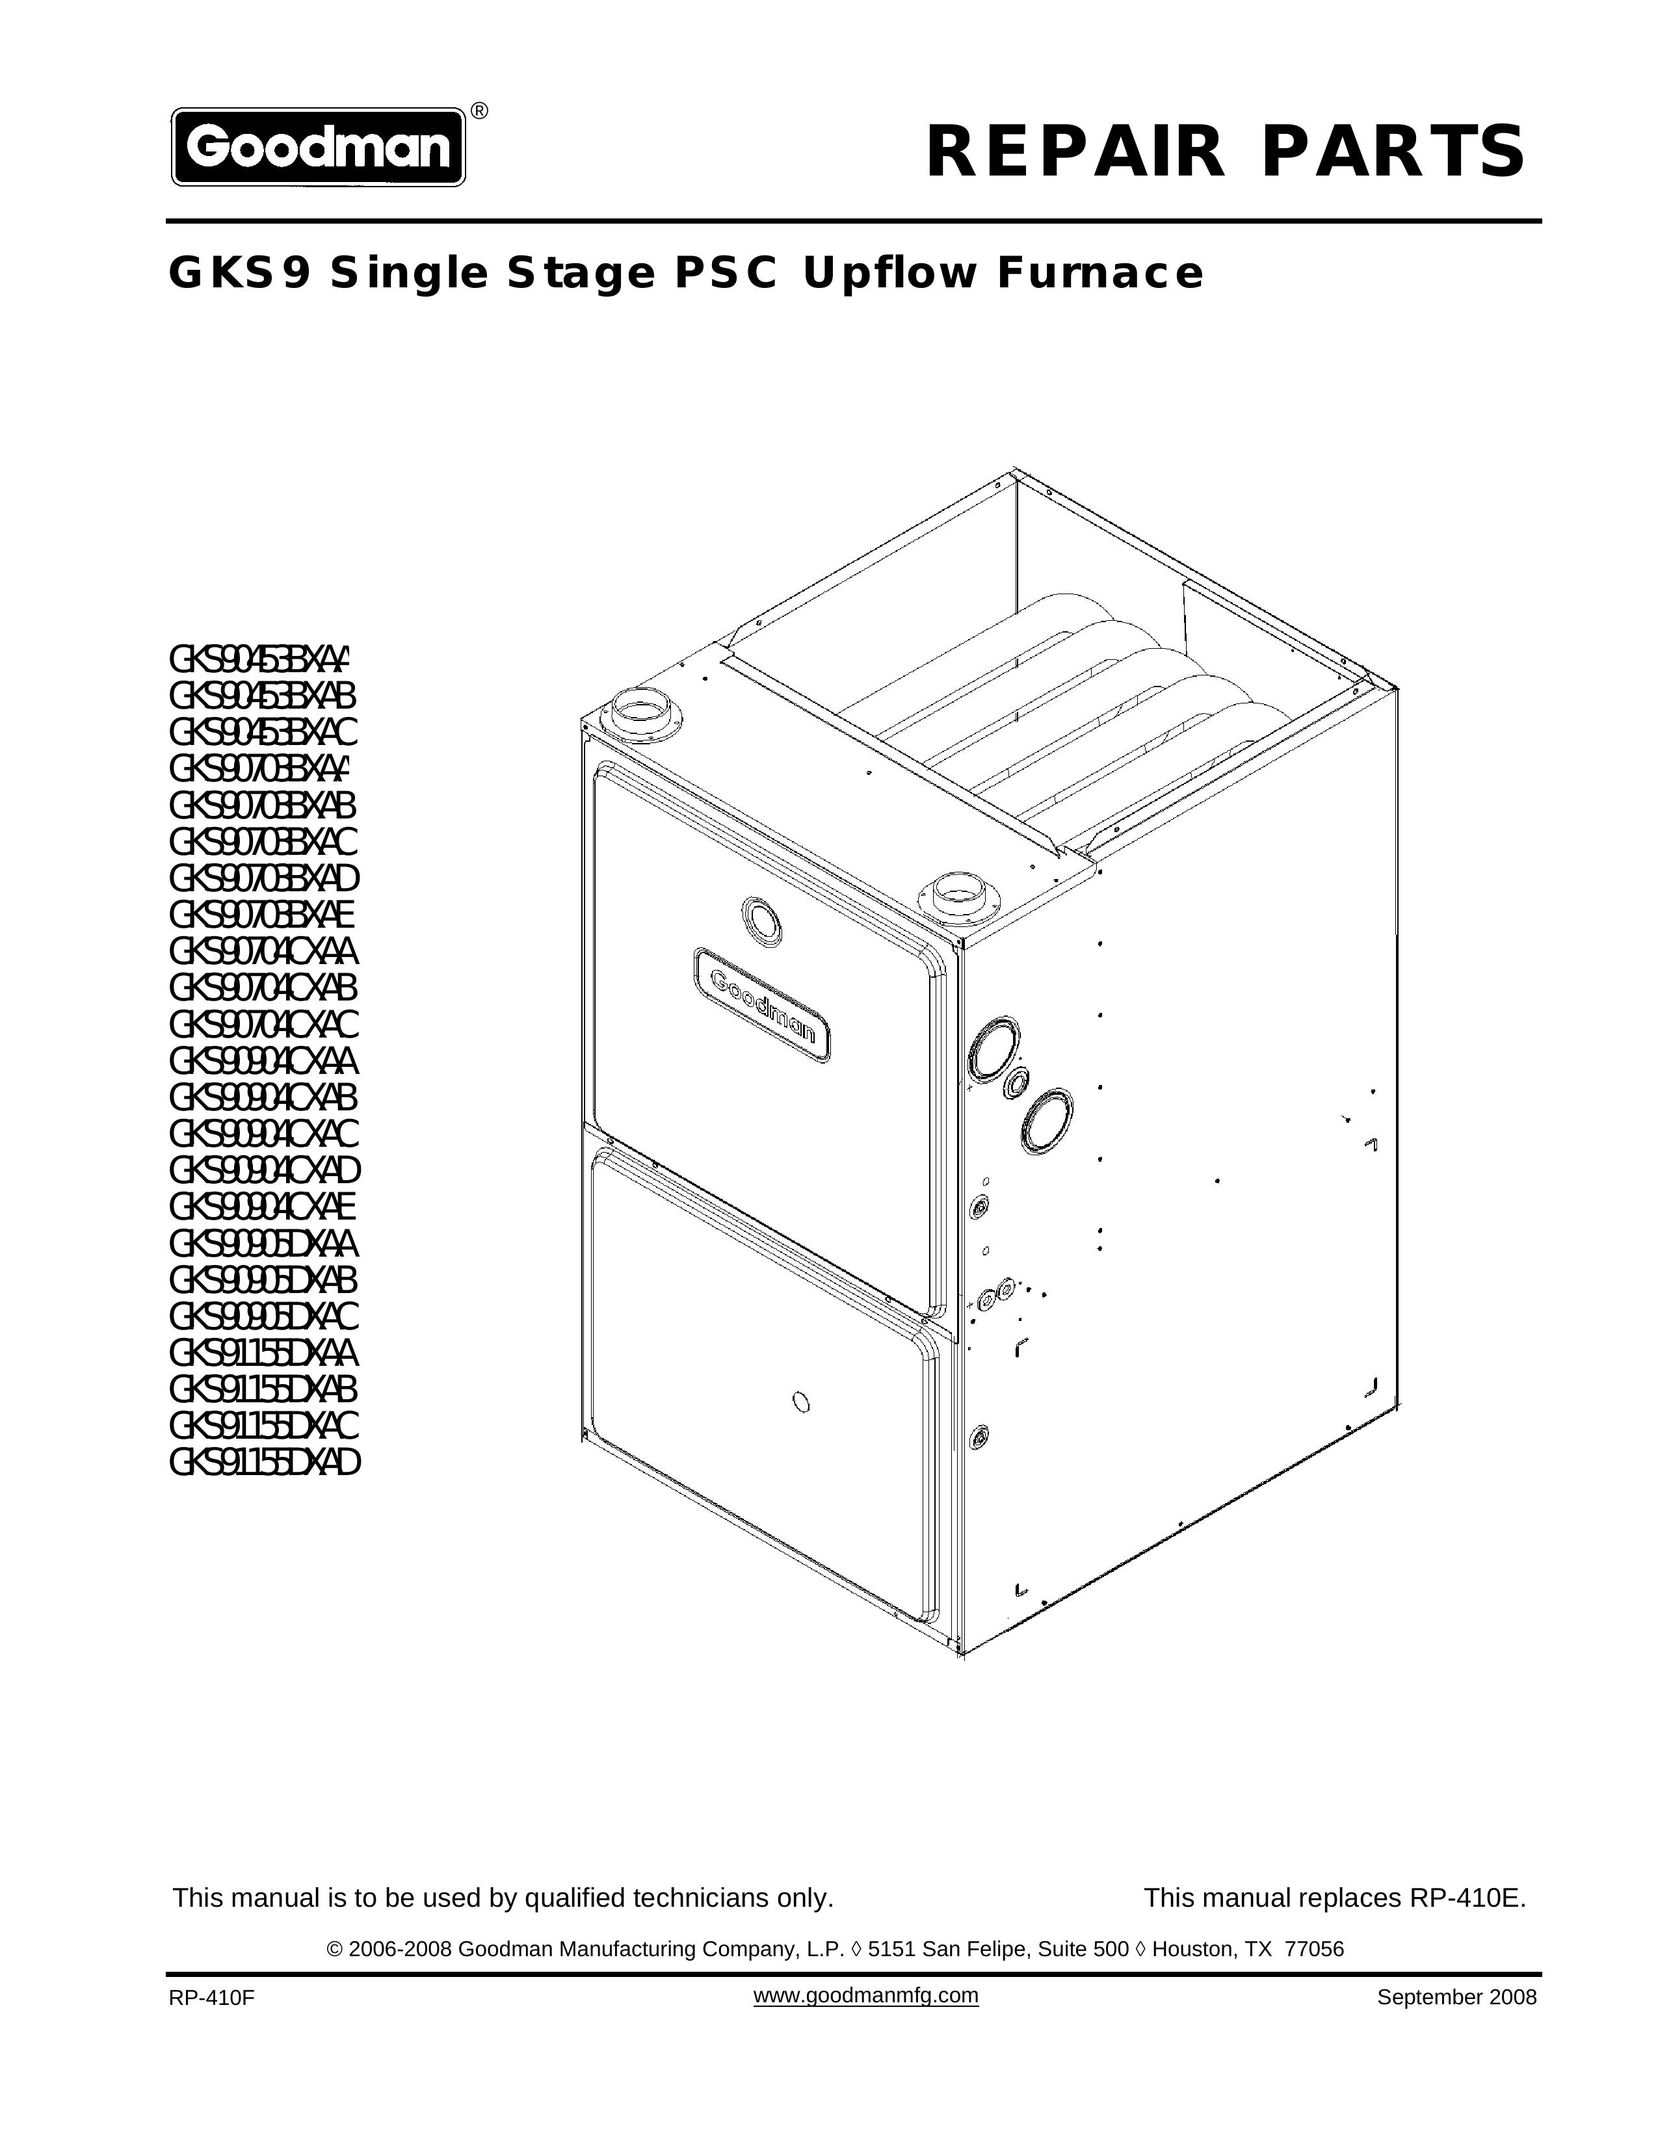 Goodman Mfg GKS90453BXAA Furnace User Manual